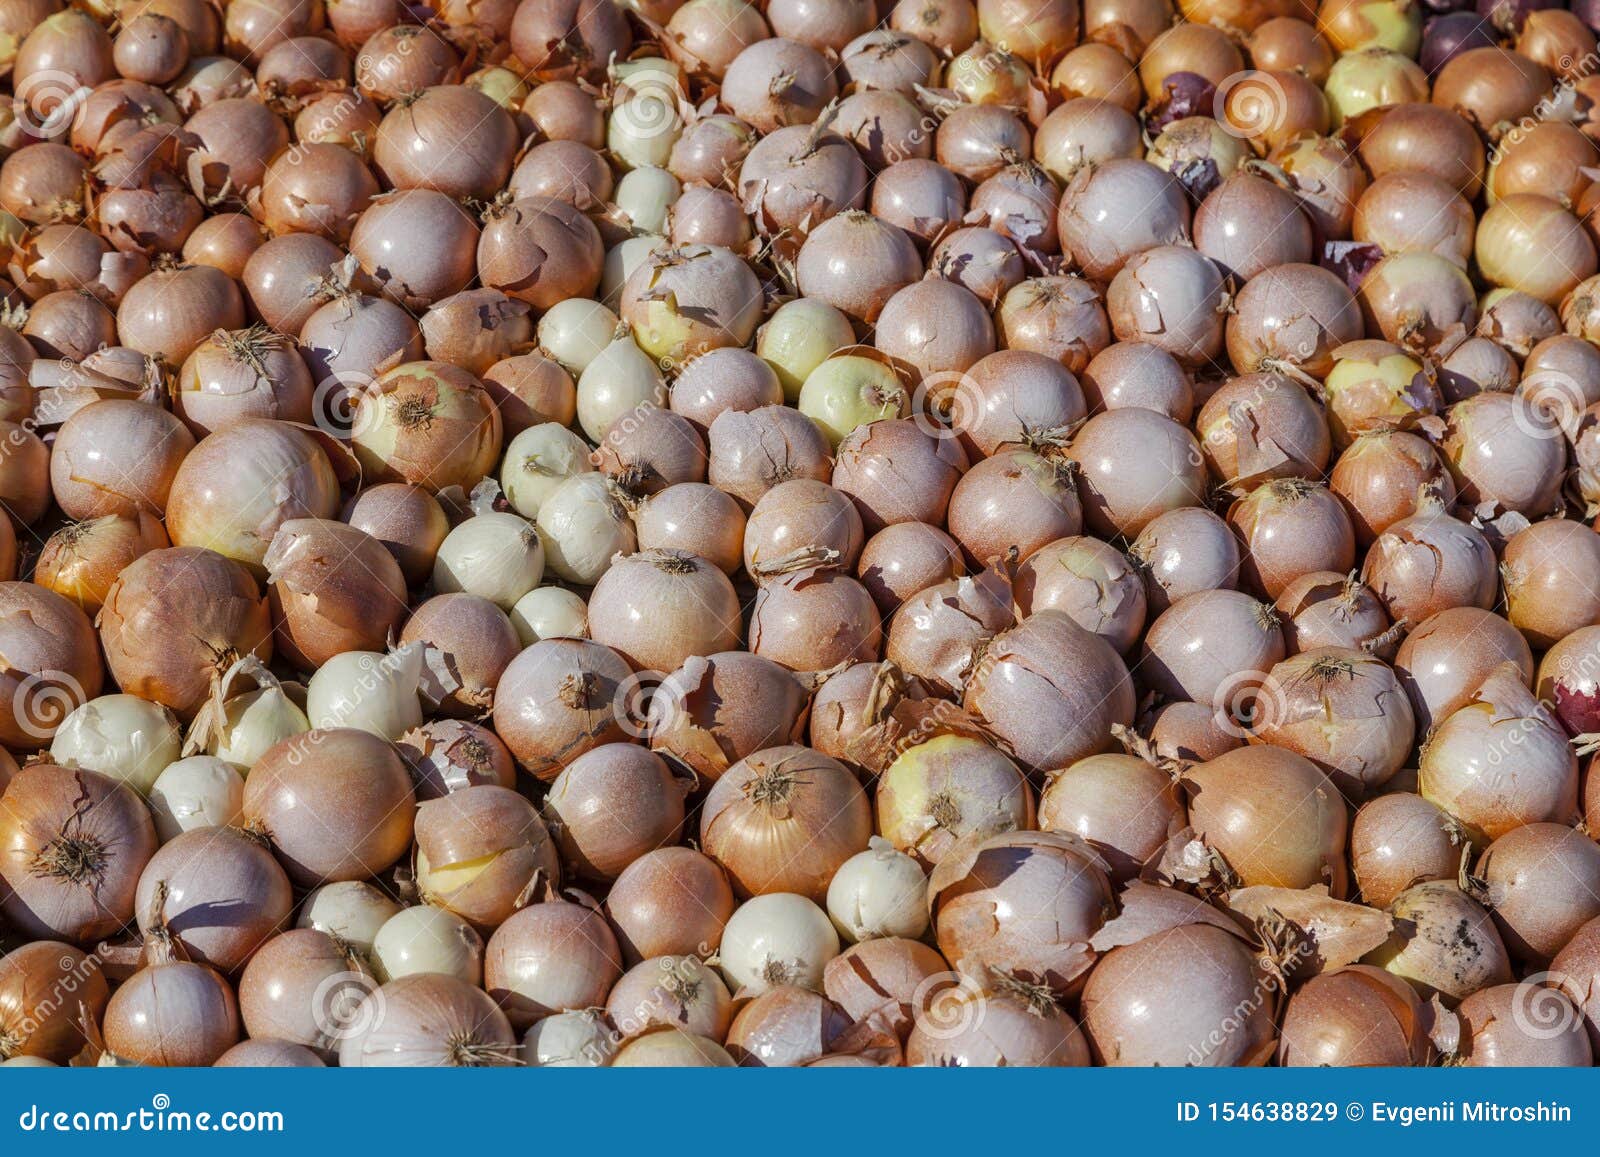 bulb onion, background, onion plantation, overproduction